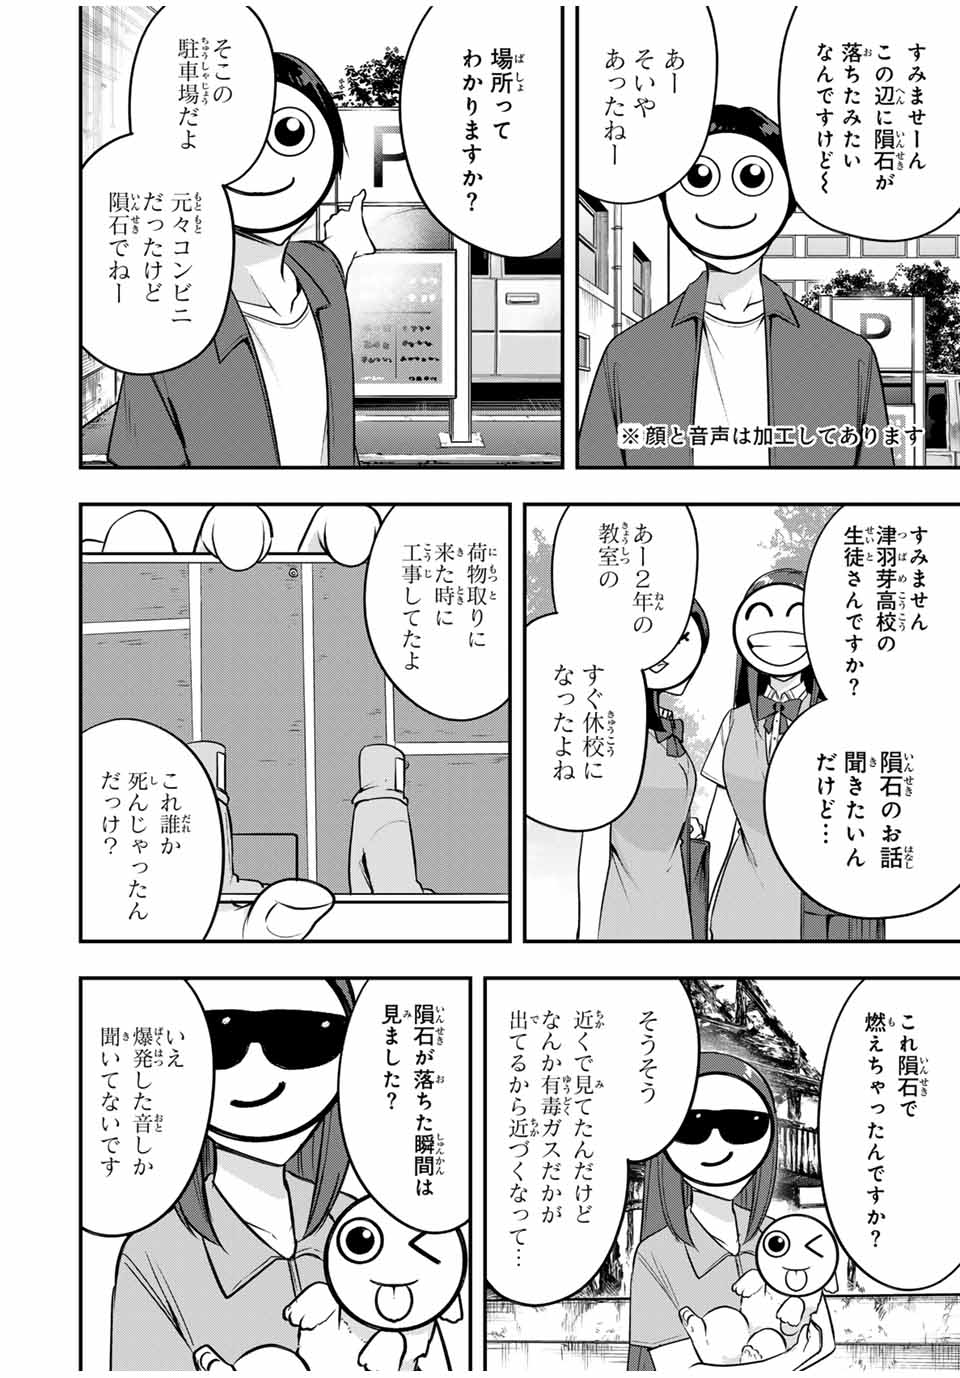 Heroine wa xx Okasegitai - Chapter 13 - Page 2